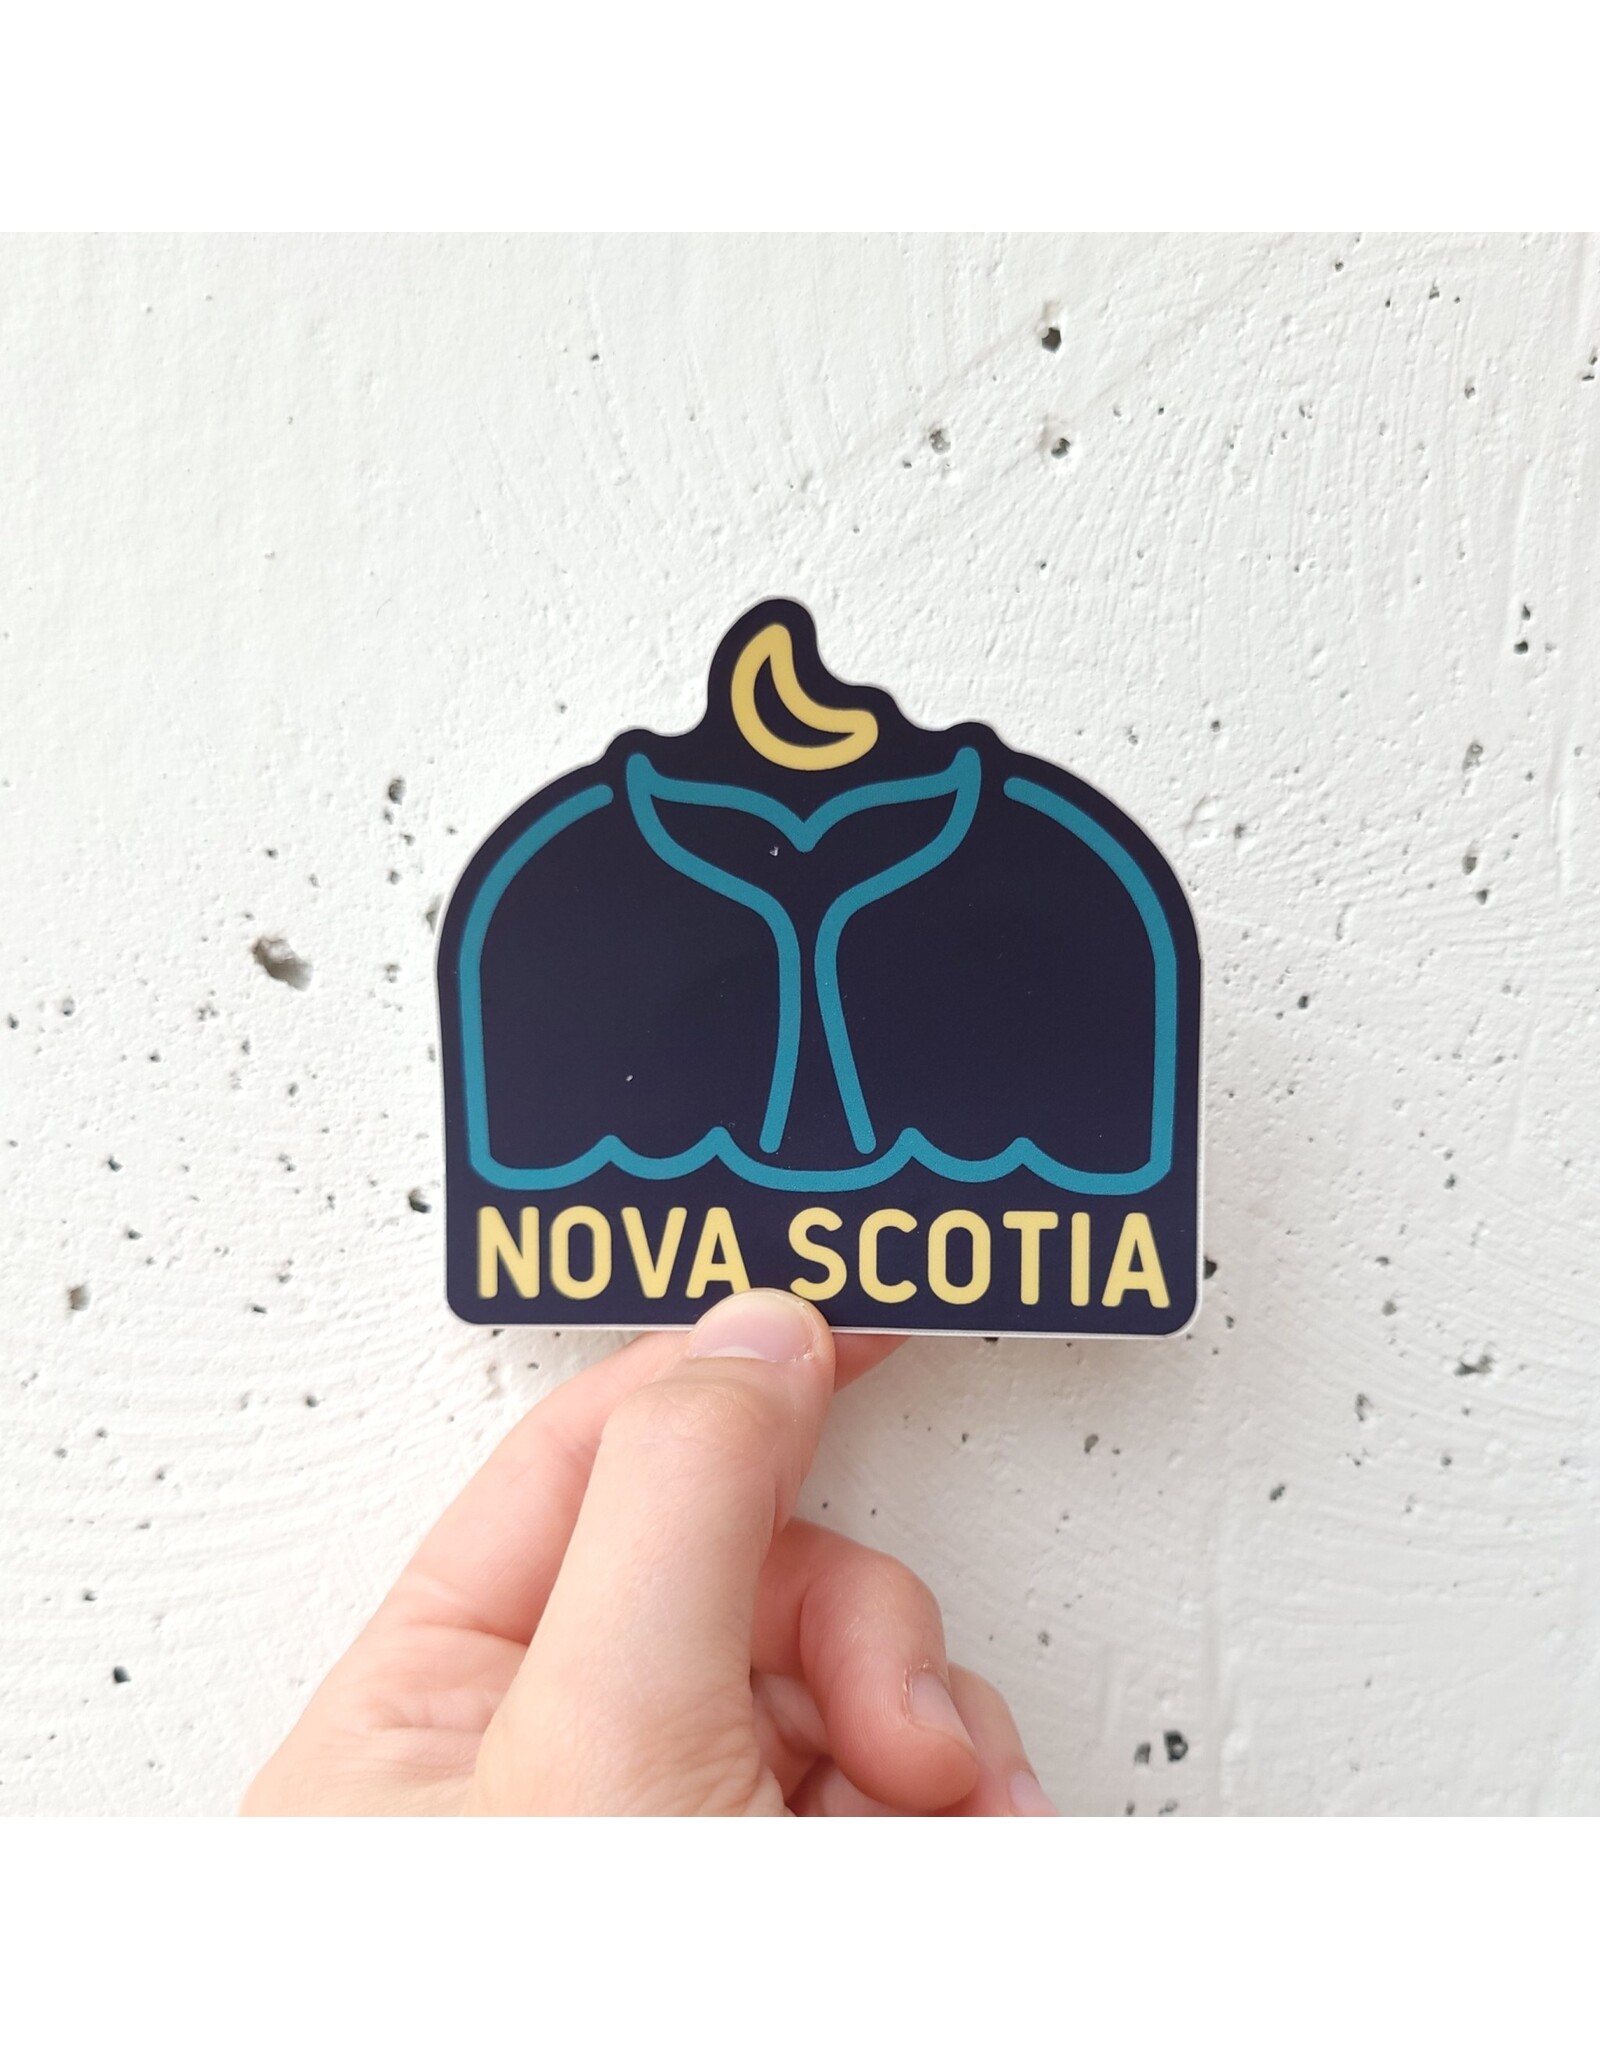 SST - Whale Tail / Nova Scotia